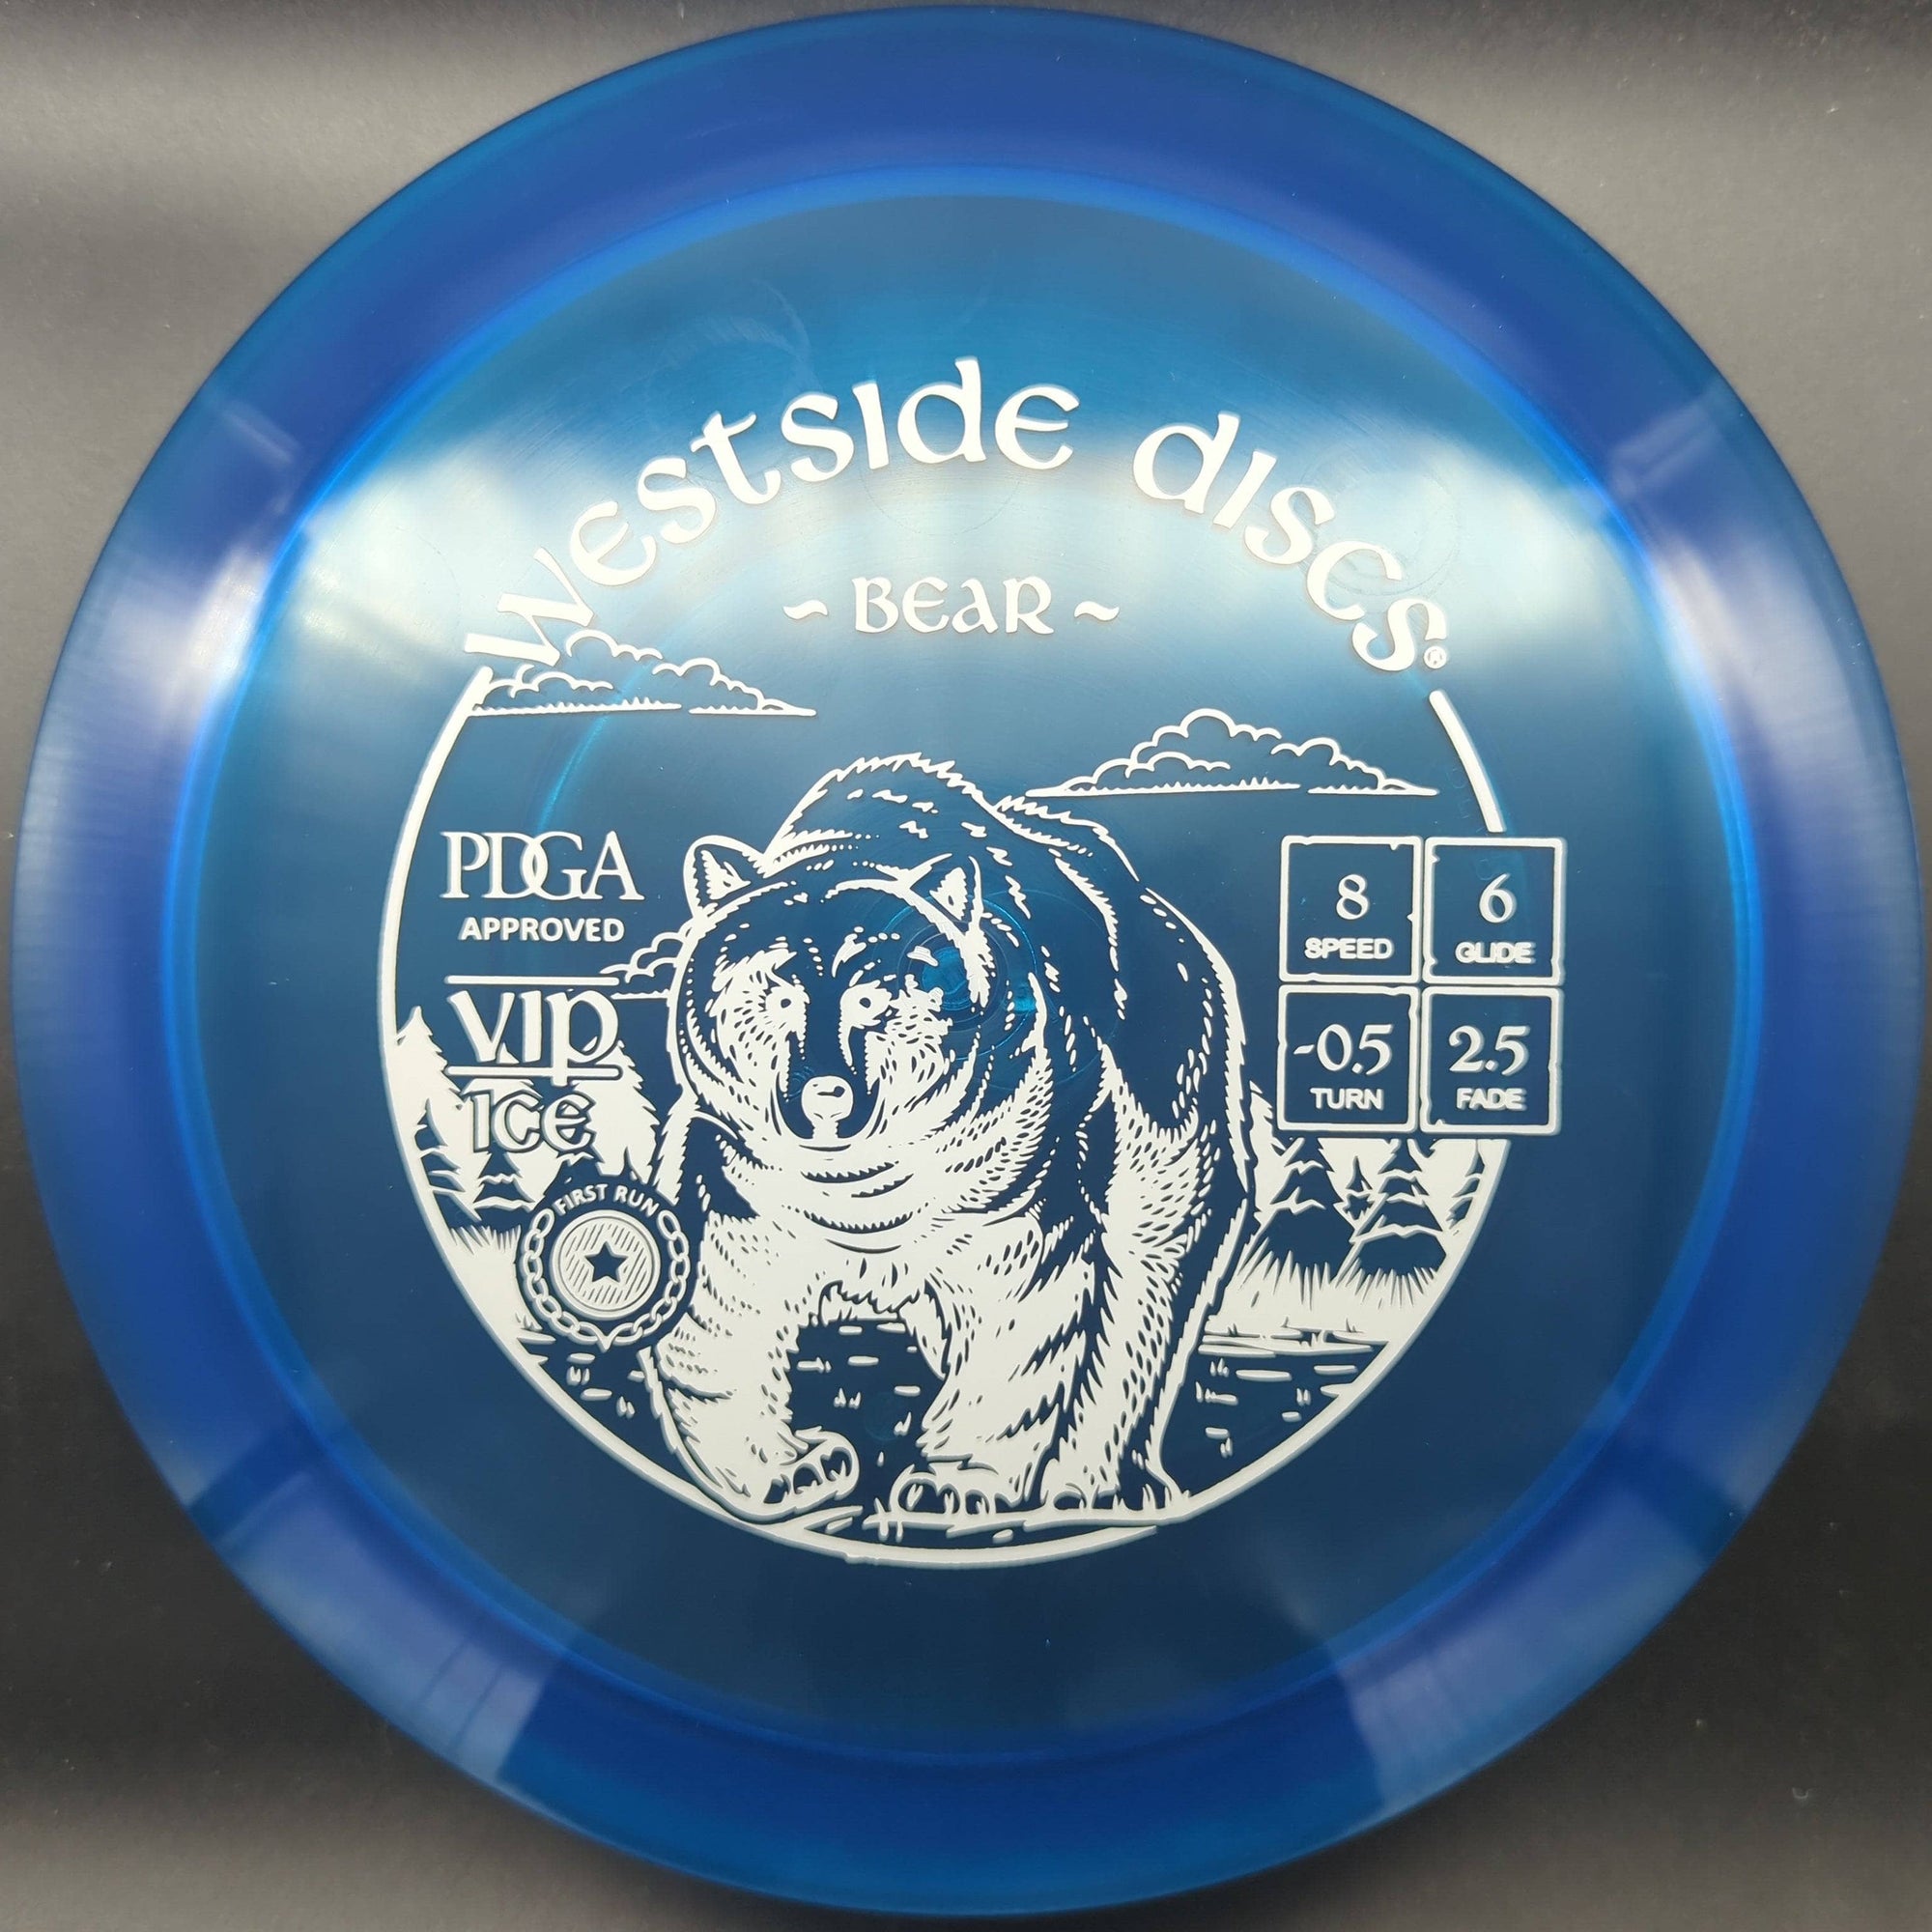 Westside Discs Fairway Driver Blue Red/Pink Stamp 176g Bear, VIP-Ice,  First Run